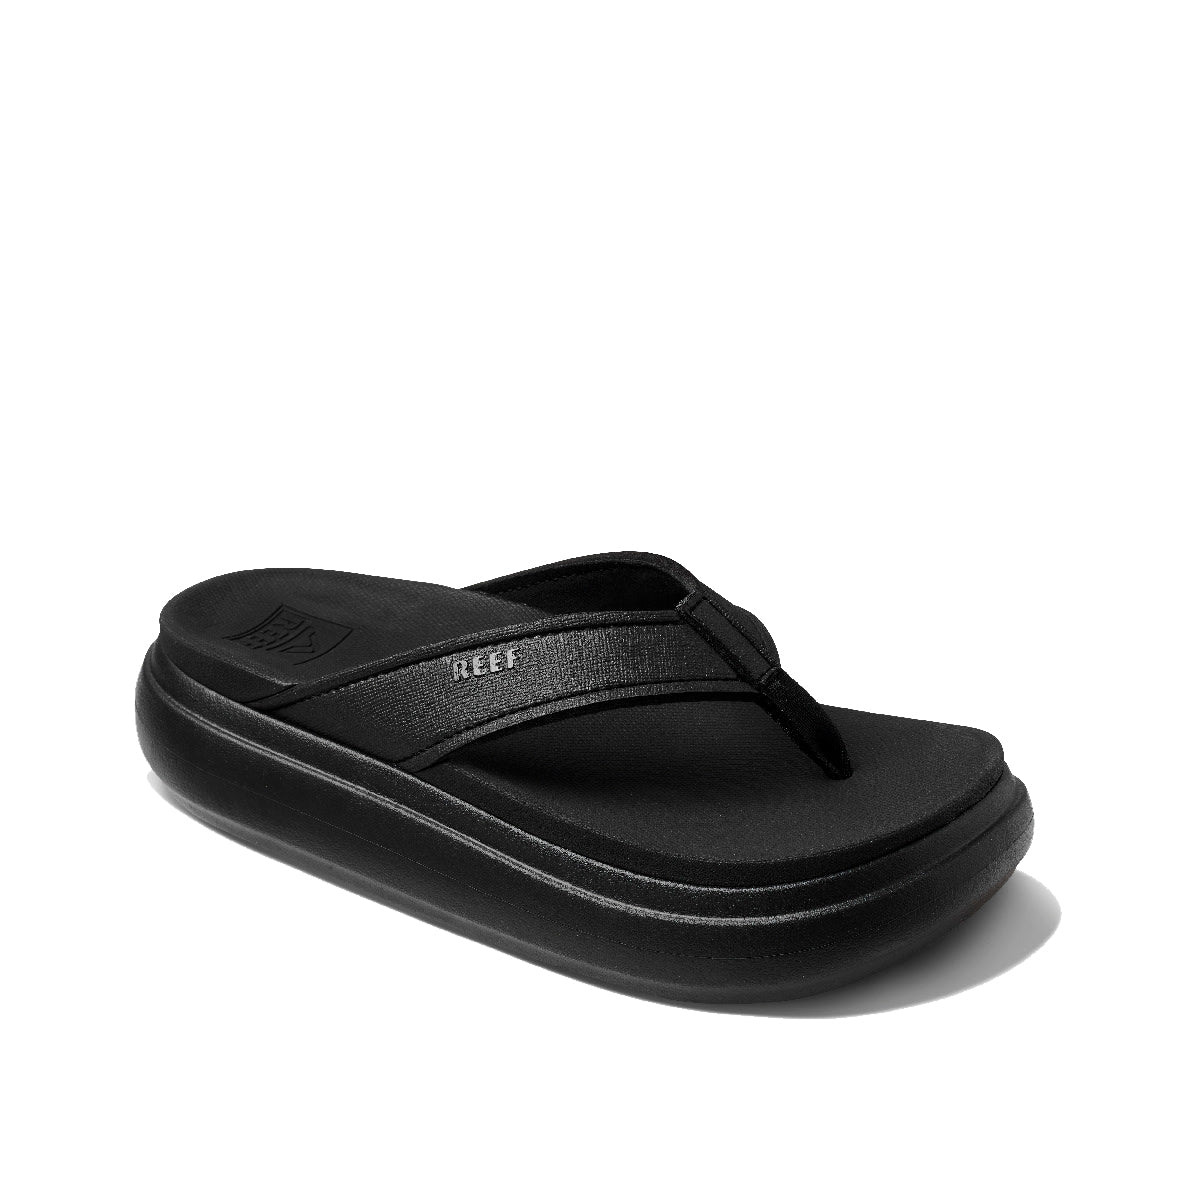 Reef Cushion Bondi Womens Sandals Black-Black 5